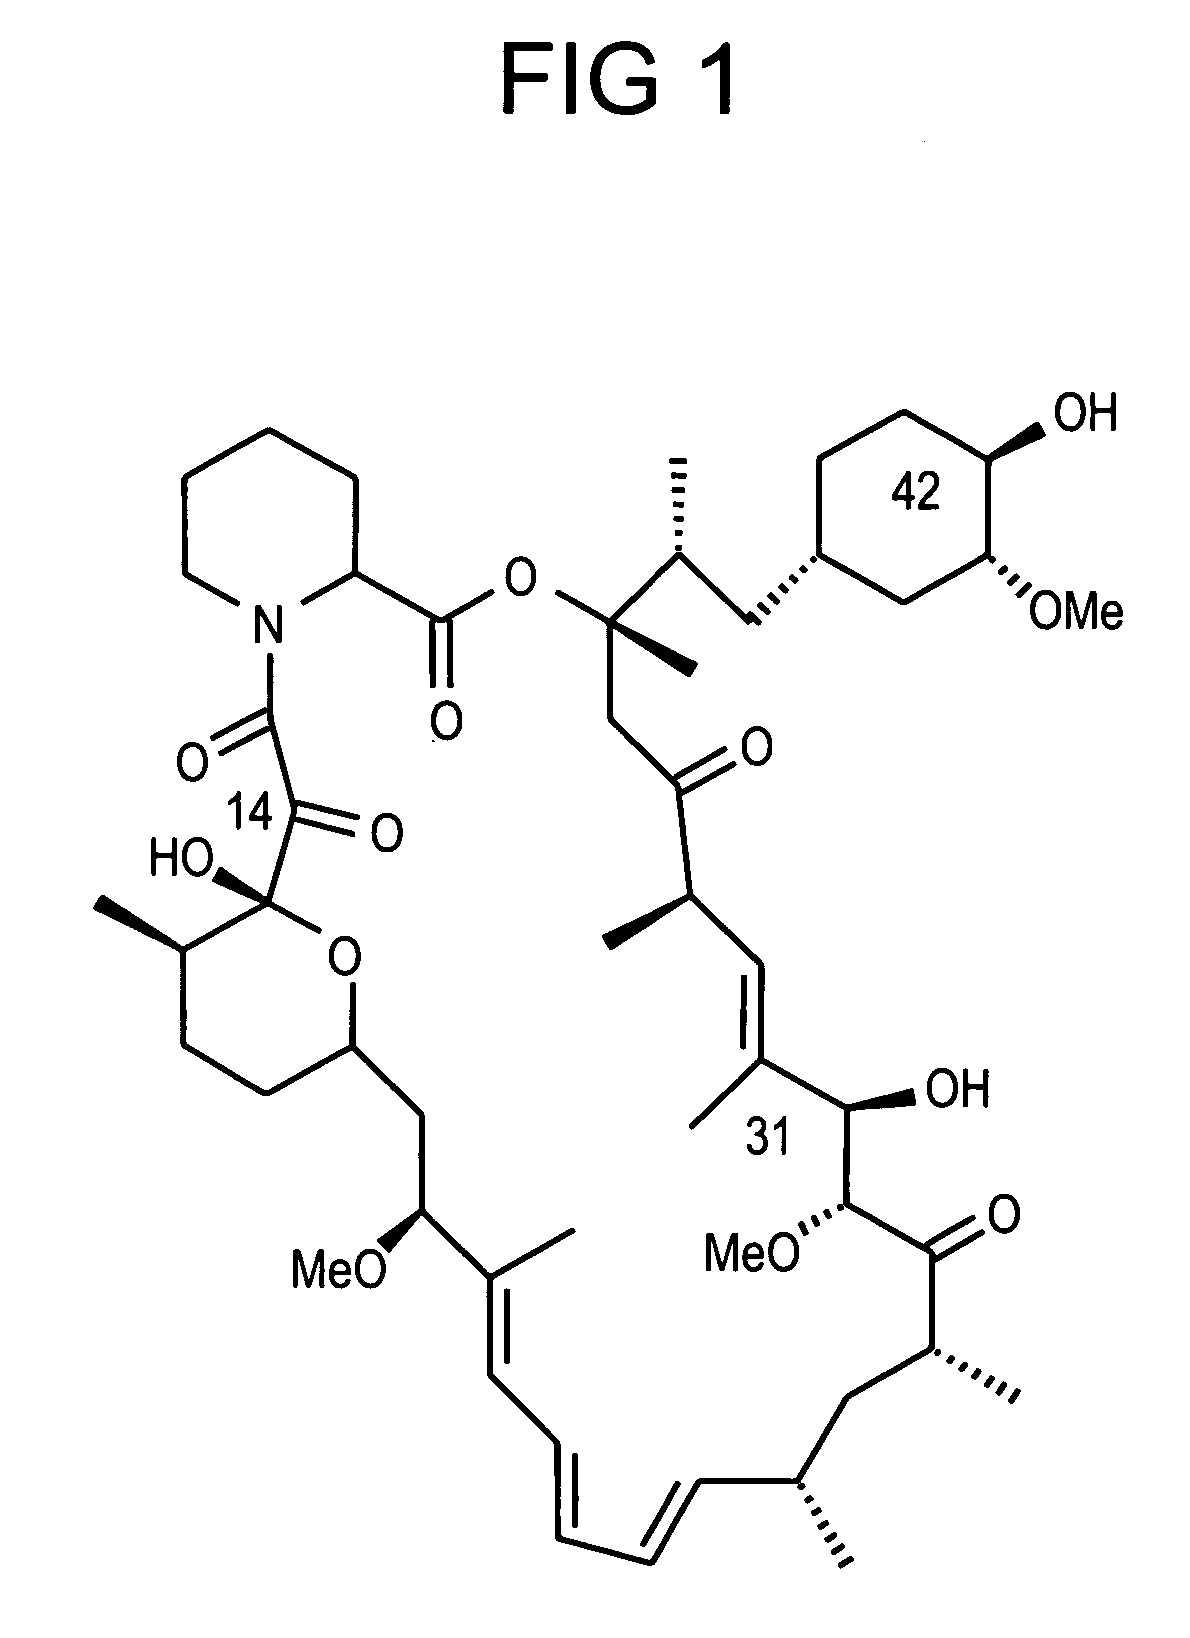 Rapamycin analogs containing an antioxidant moiety